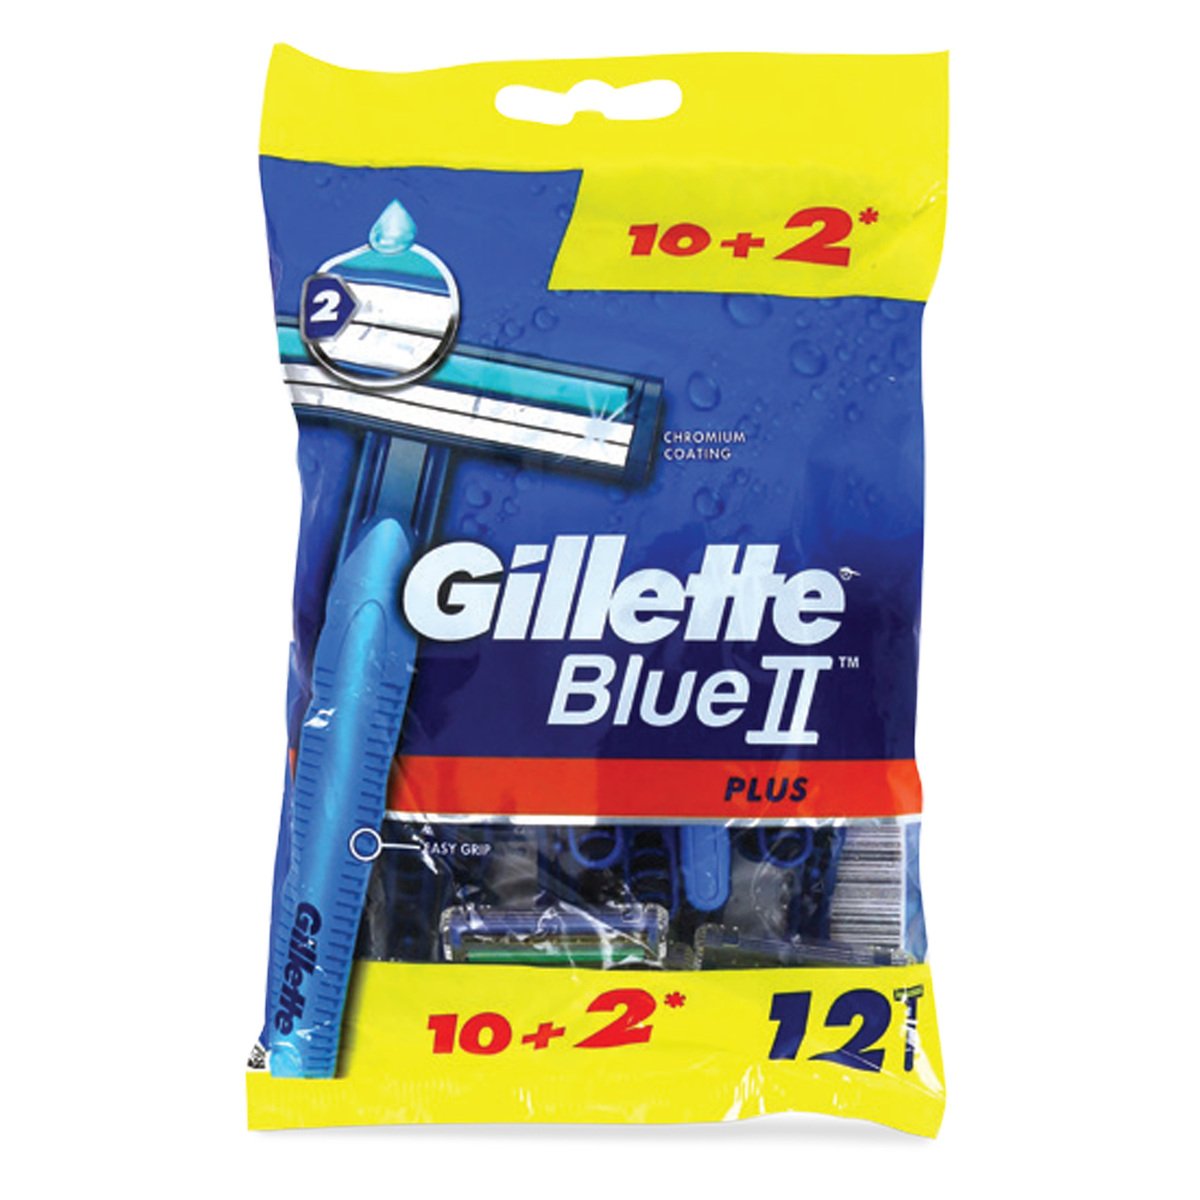 Gillette Razor Blue II Plus 10+2 Online at Best Price | Razor ...